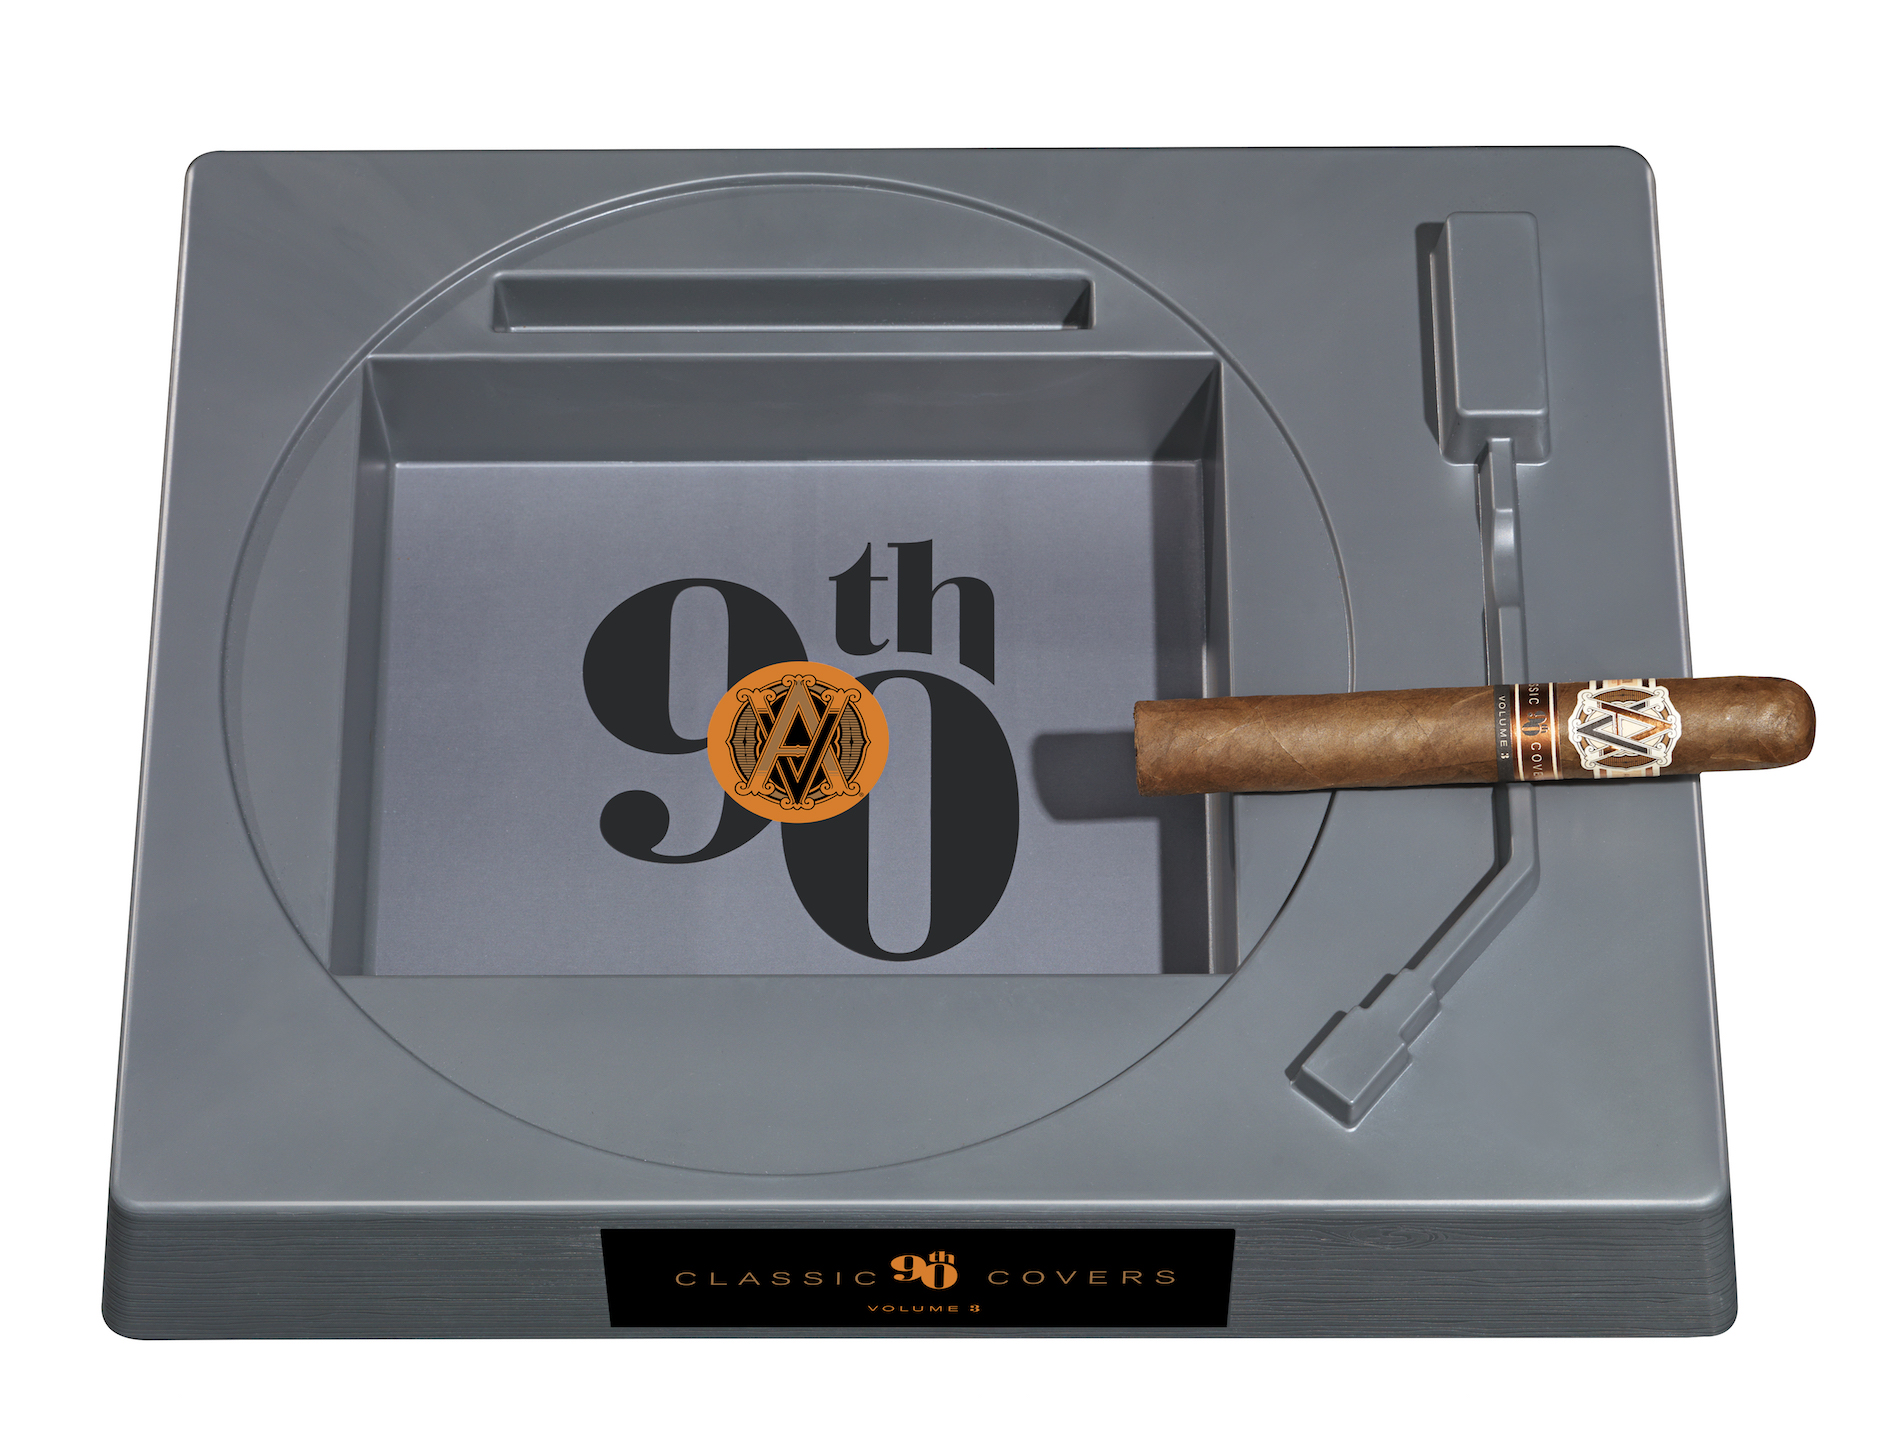 AVO 90th Classic Covers Volume 3 ashtray